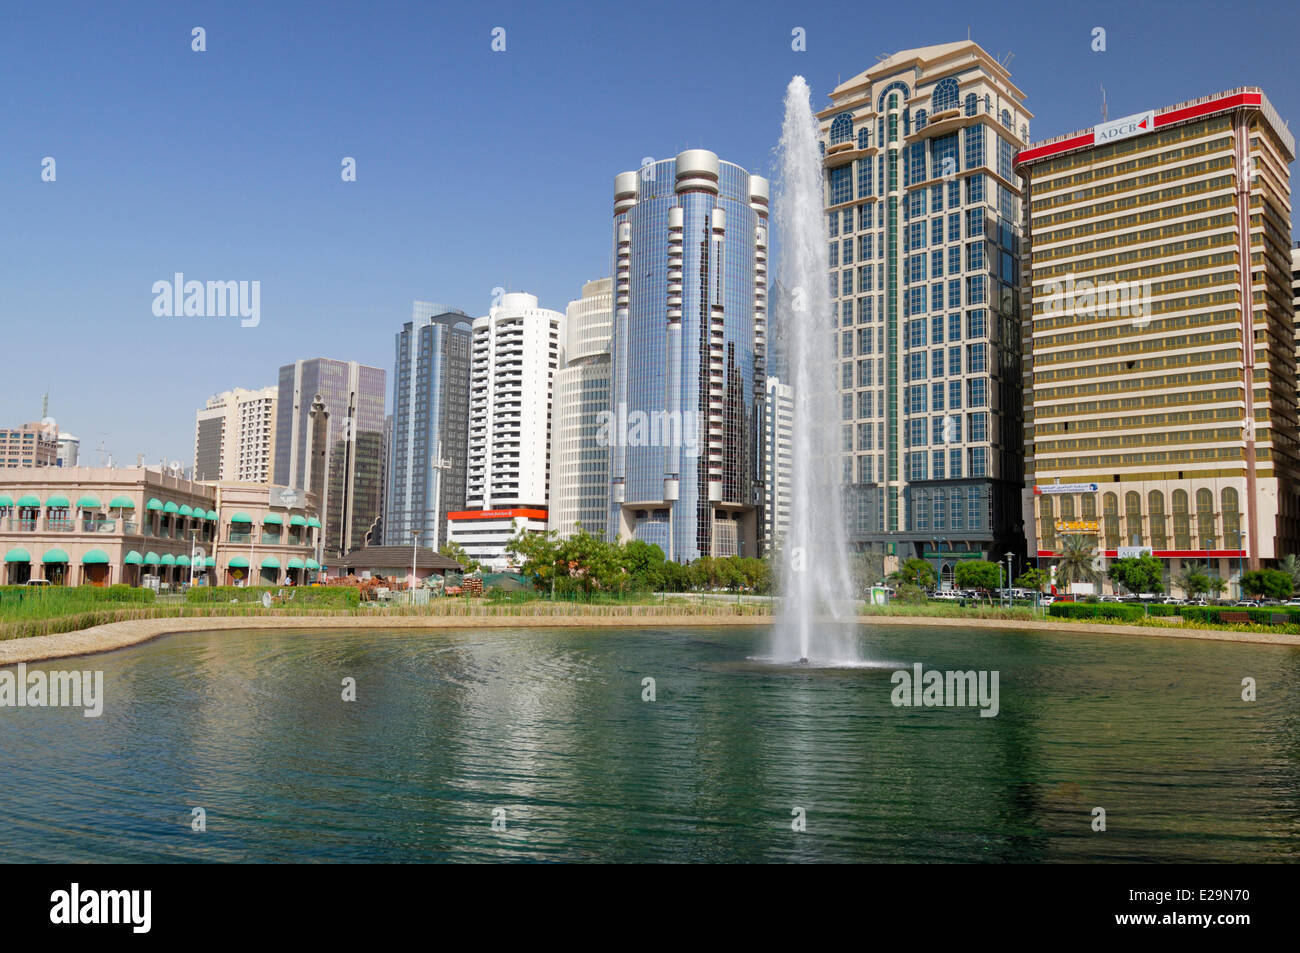 Emirati Arabi Uniti Abu Dhabi emirato, citta' di Abu Dhabi, il Parco del Lago Fontana Foto Stock